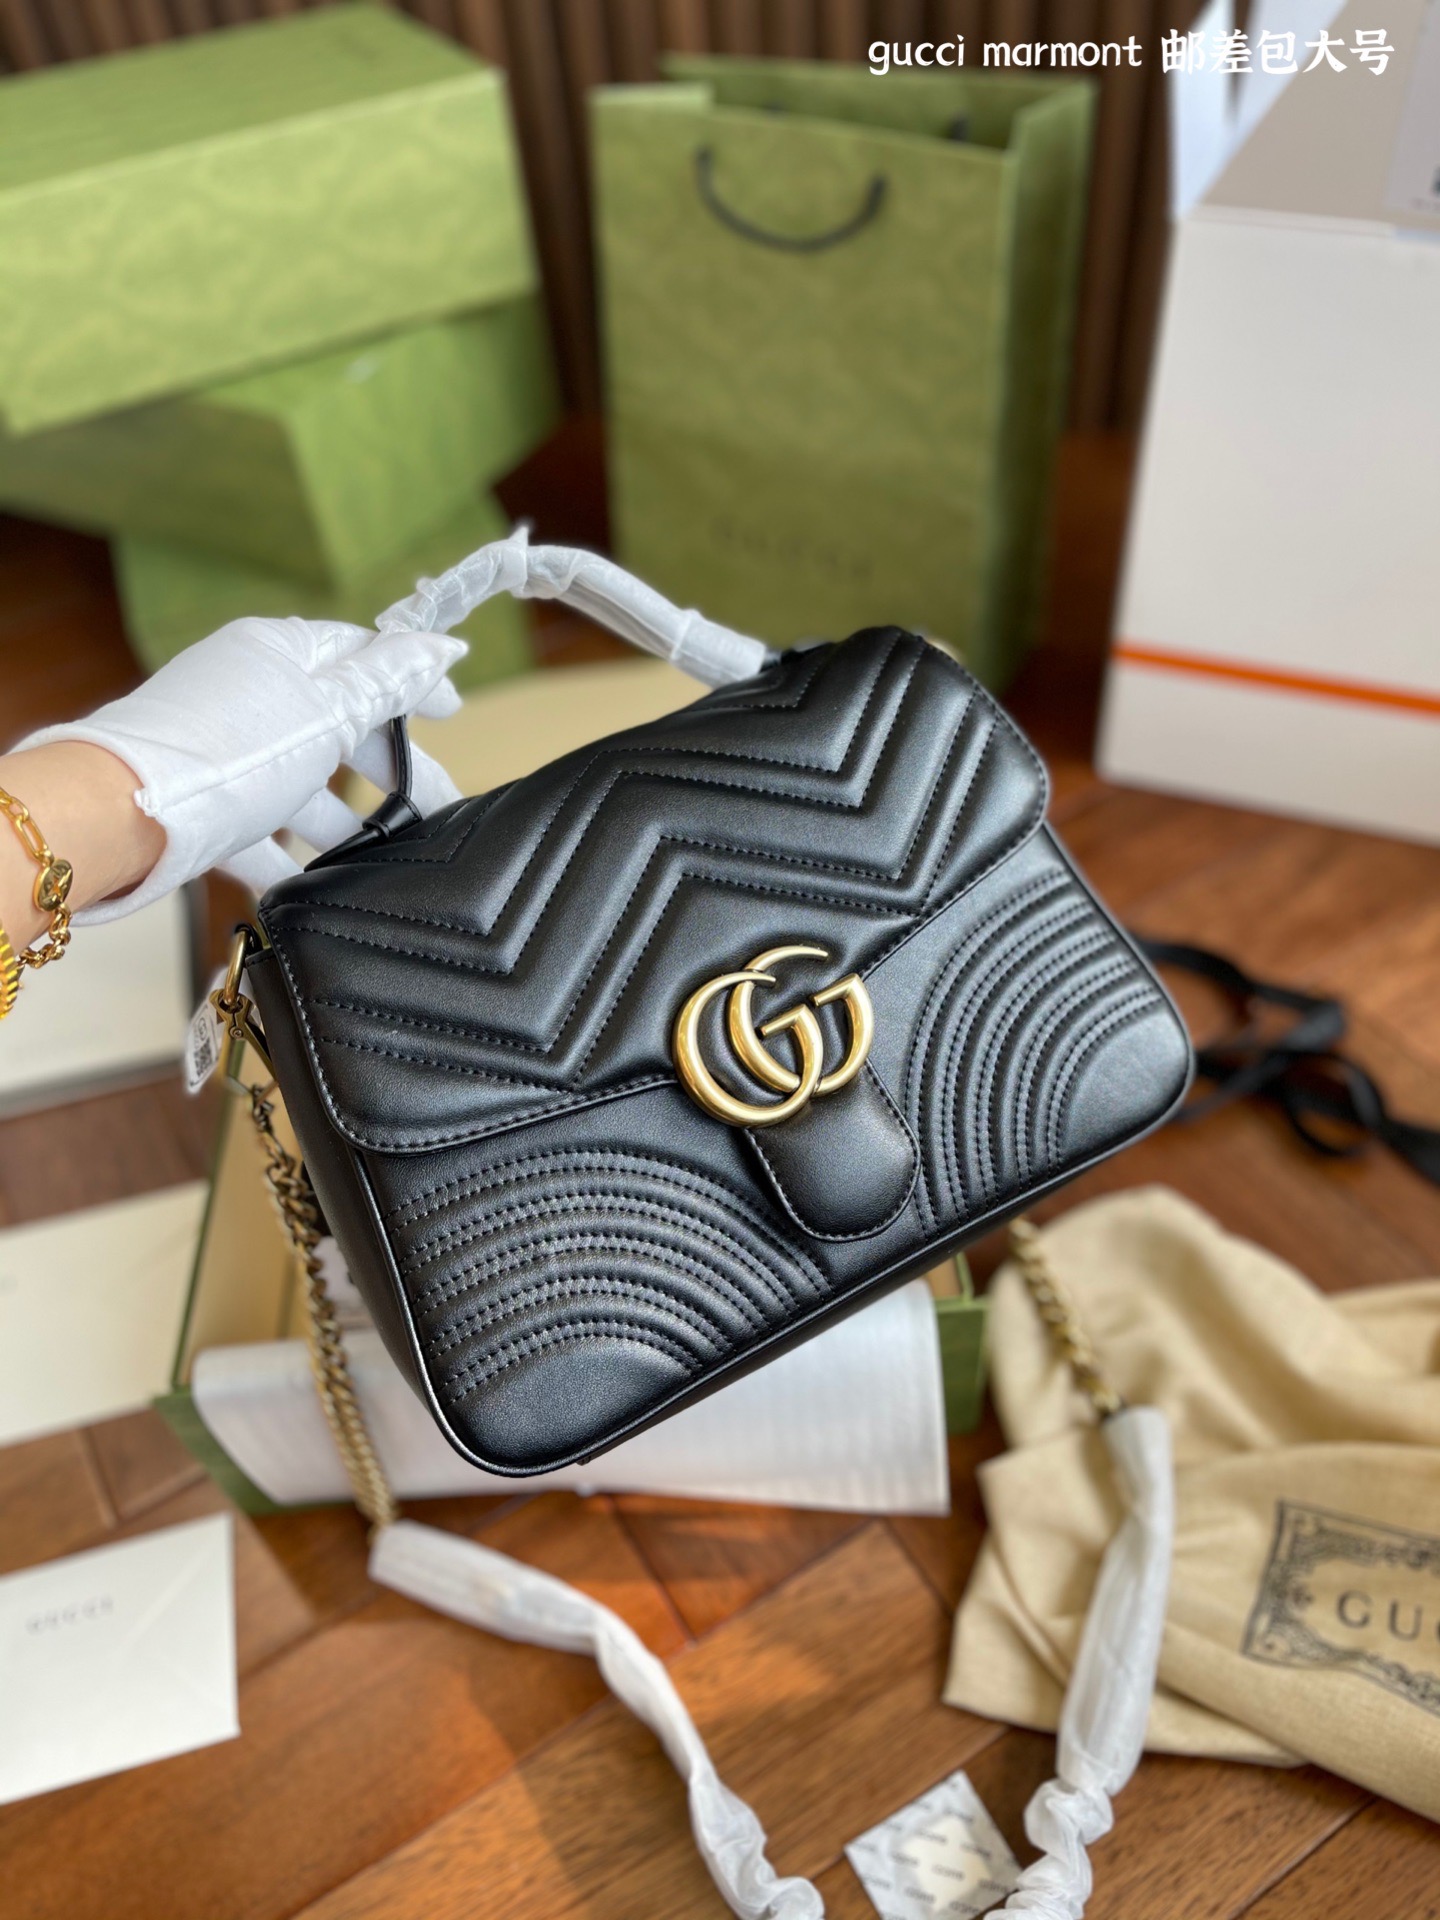 Gucci Marmont Shoulder Bags